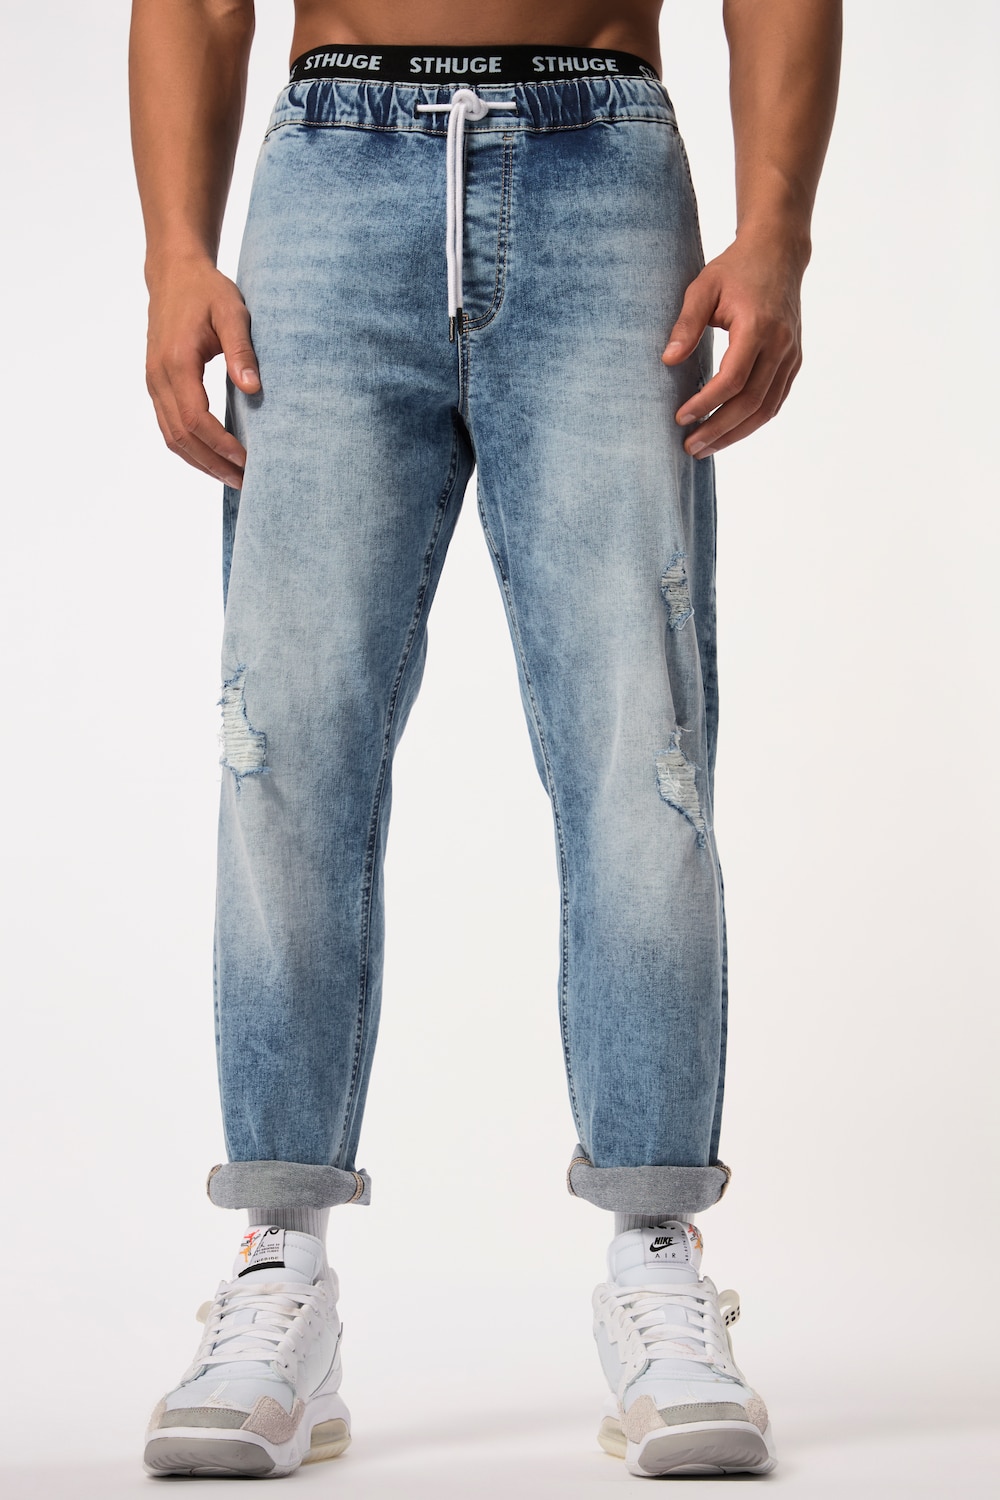 Grote Maten STHUGE jeans FLEXLASTIC®male, blauw, Maat: 7XL, Katoen, STHUGE